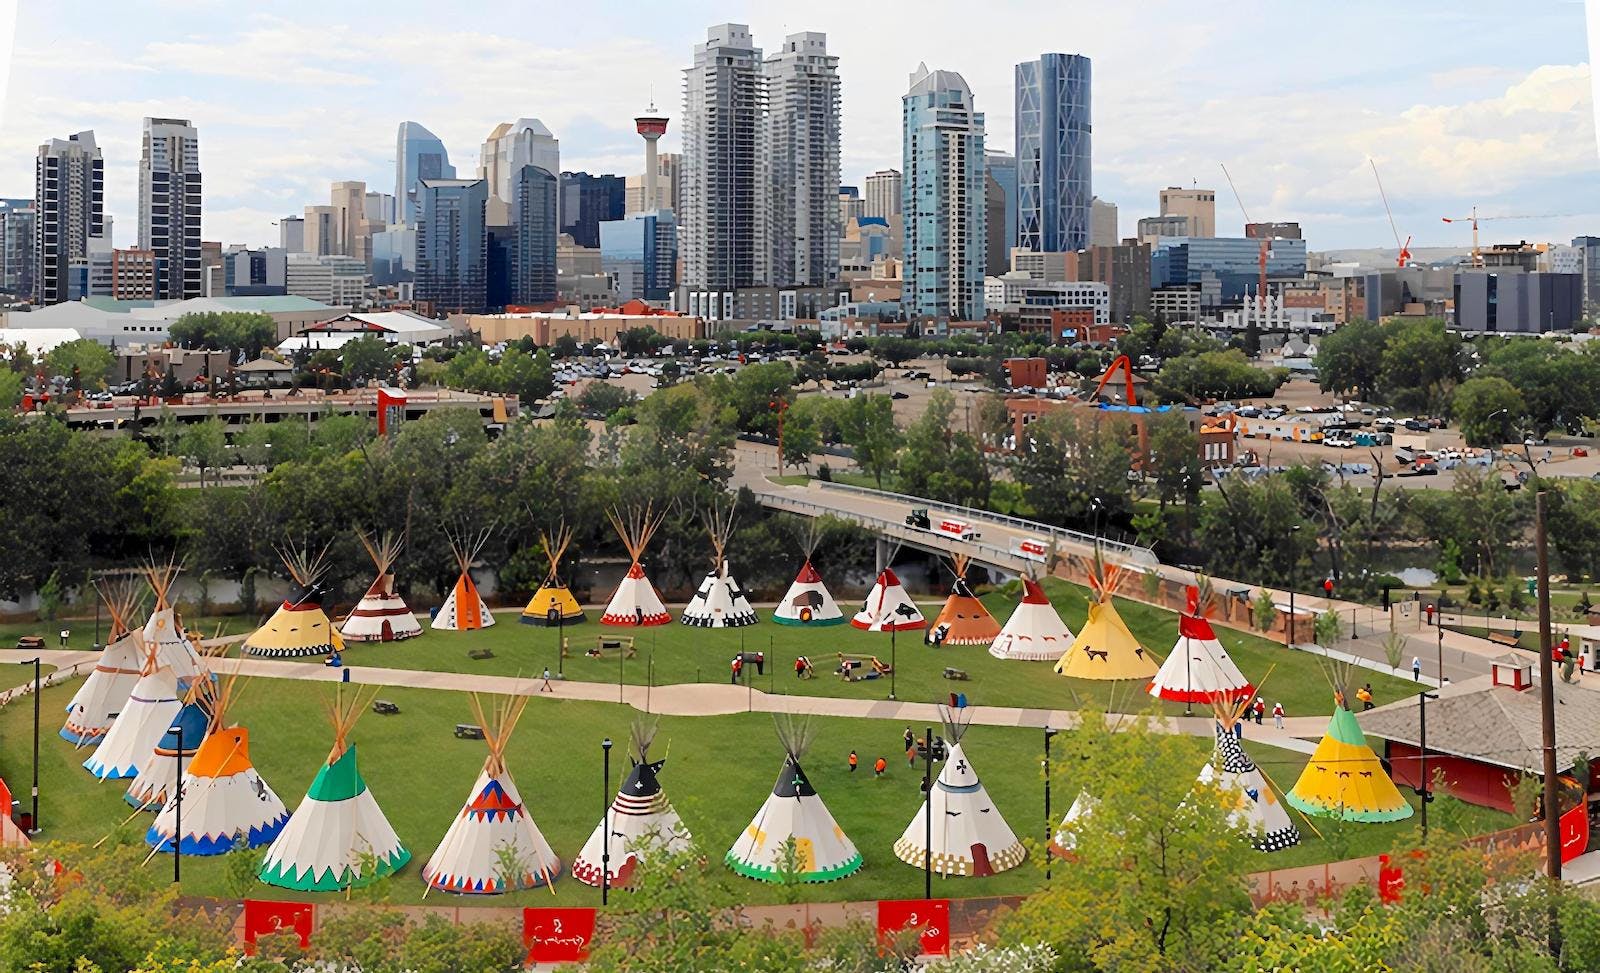 Indigenous culture festival near Calgary skyline